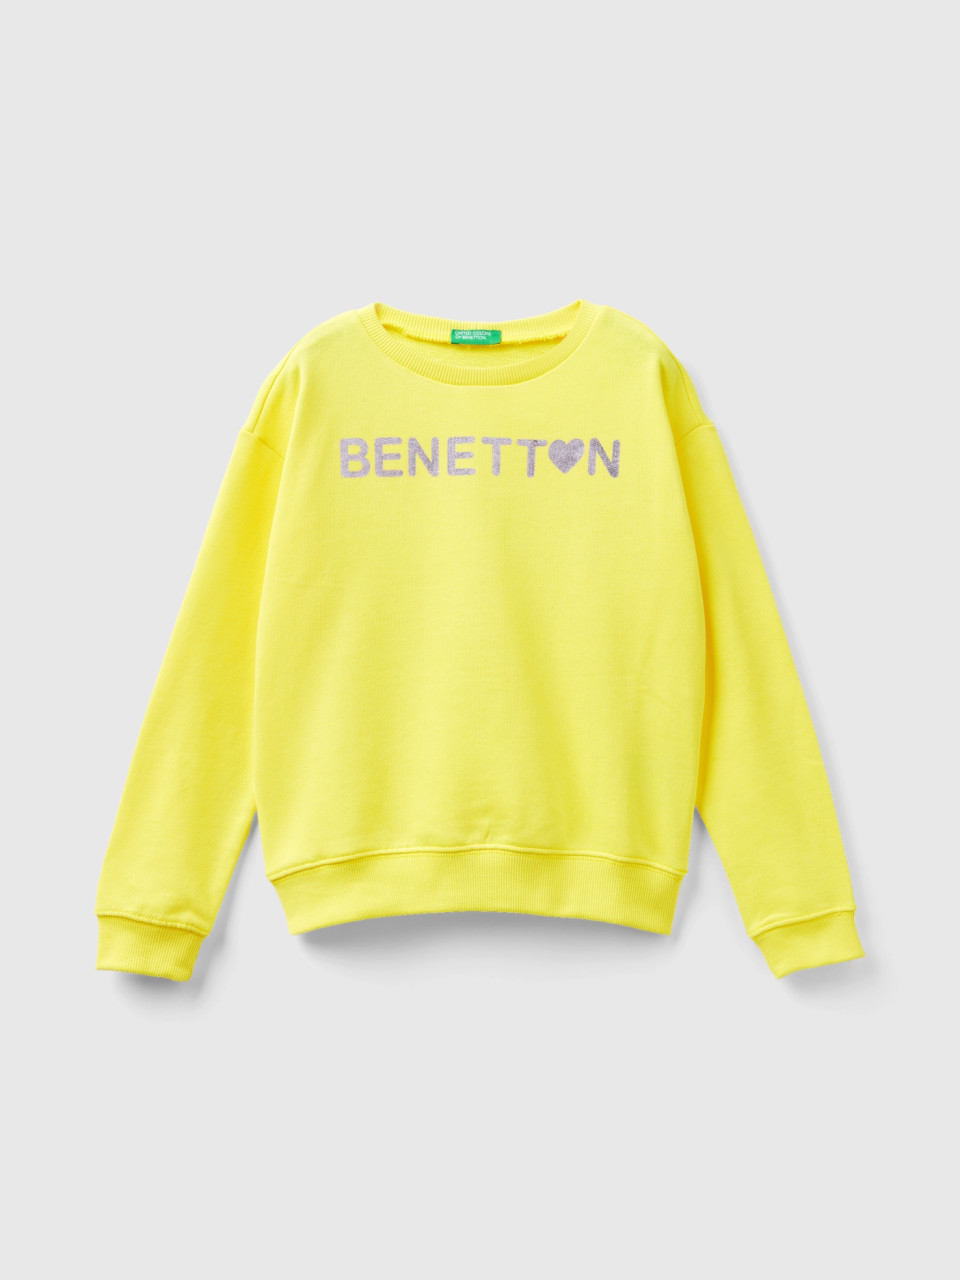 Benetton, 100% Cotton Sweatshirt With Logo, Yellow, Kids